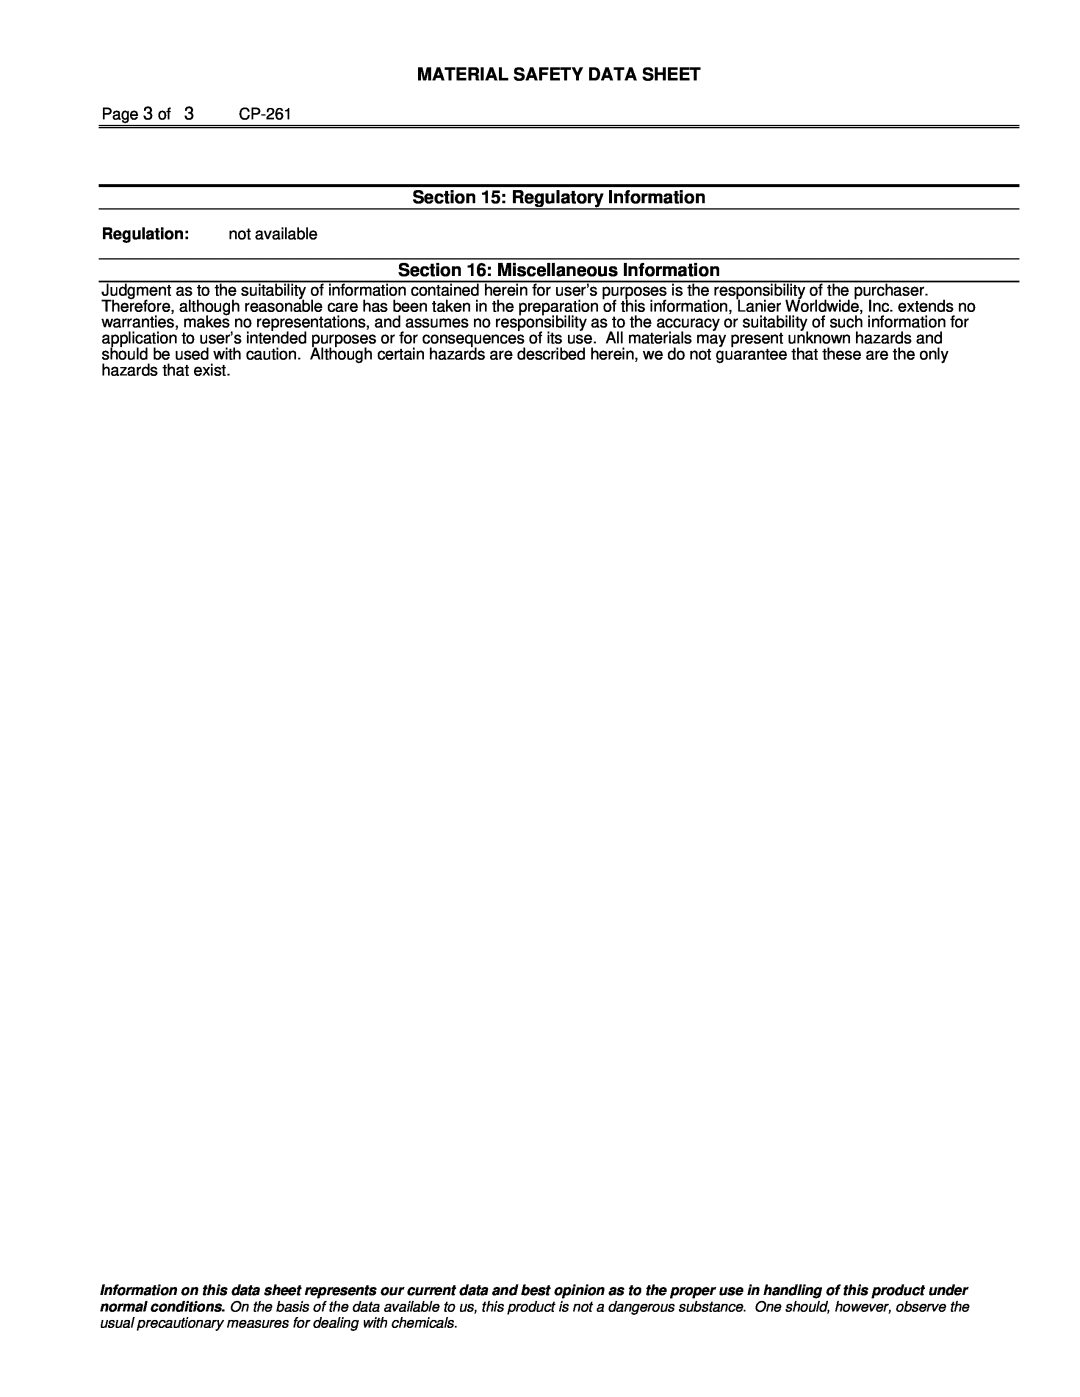 Lanier 117-0154 manual Material Safety Data Sheet, Regulatory Information, Miscellaneous Information, Regulation 